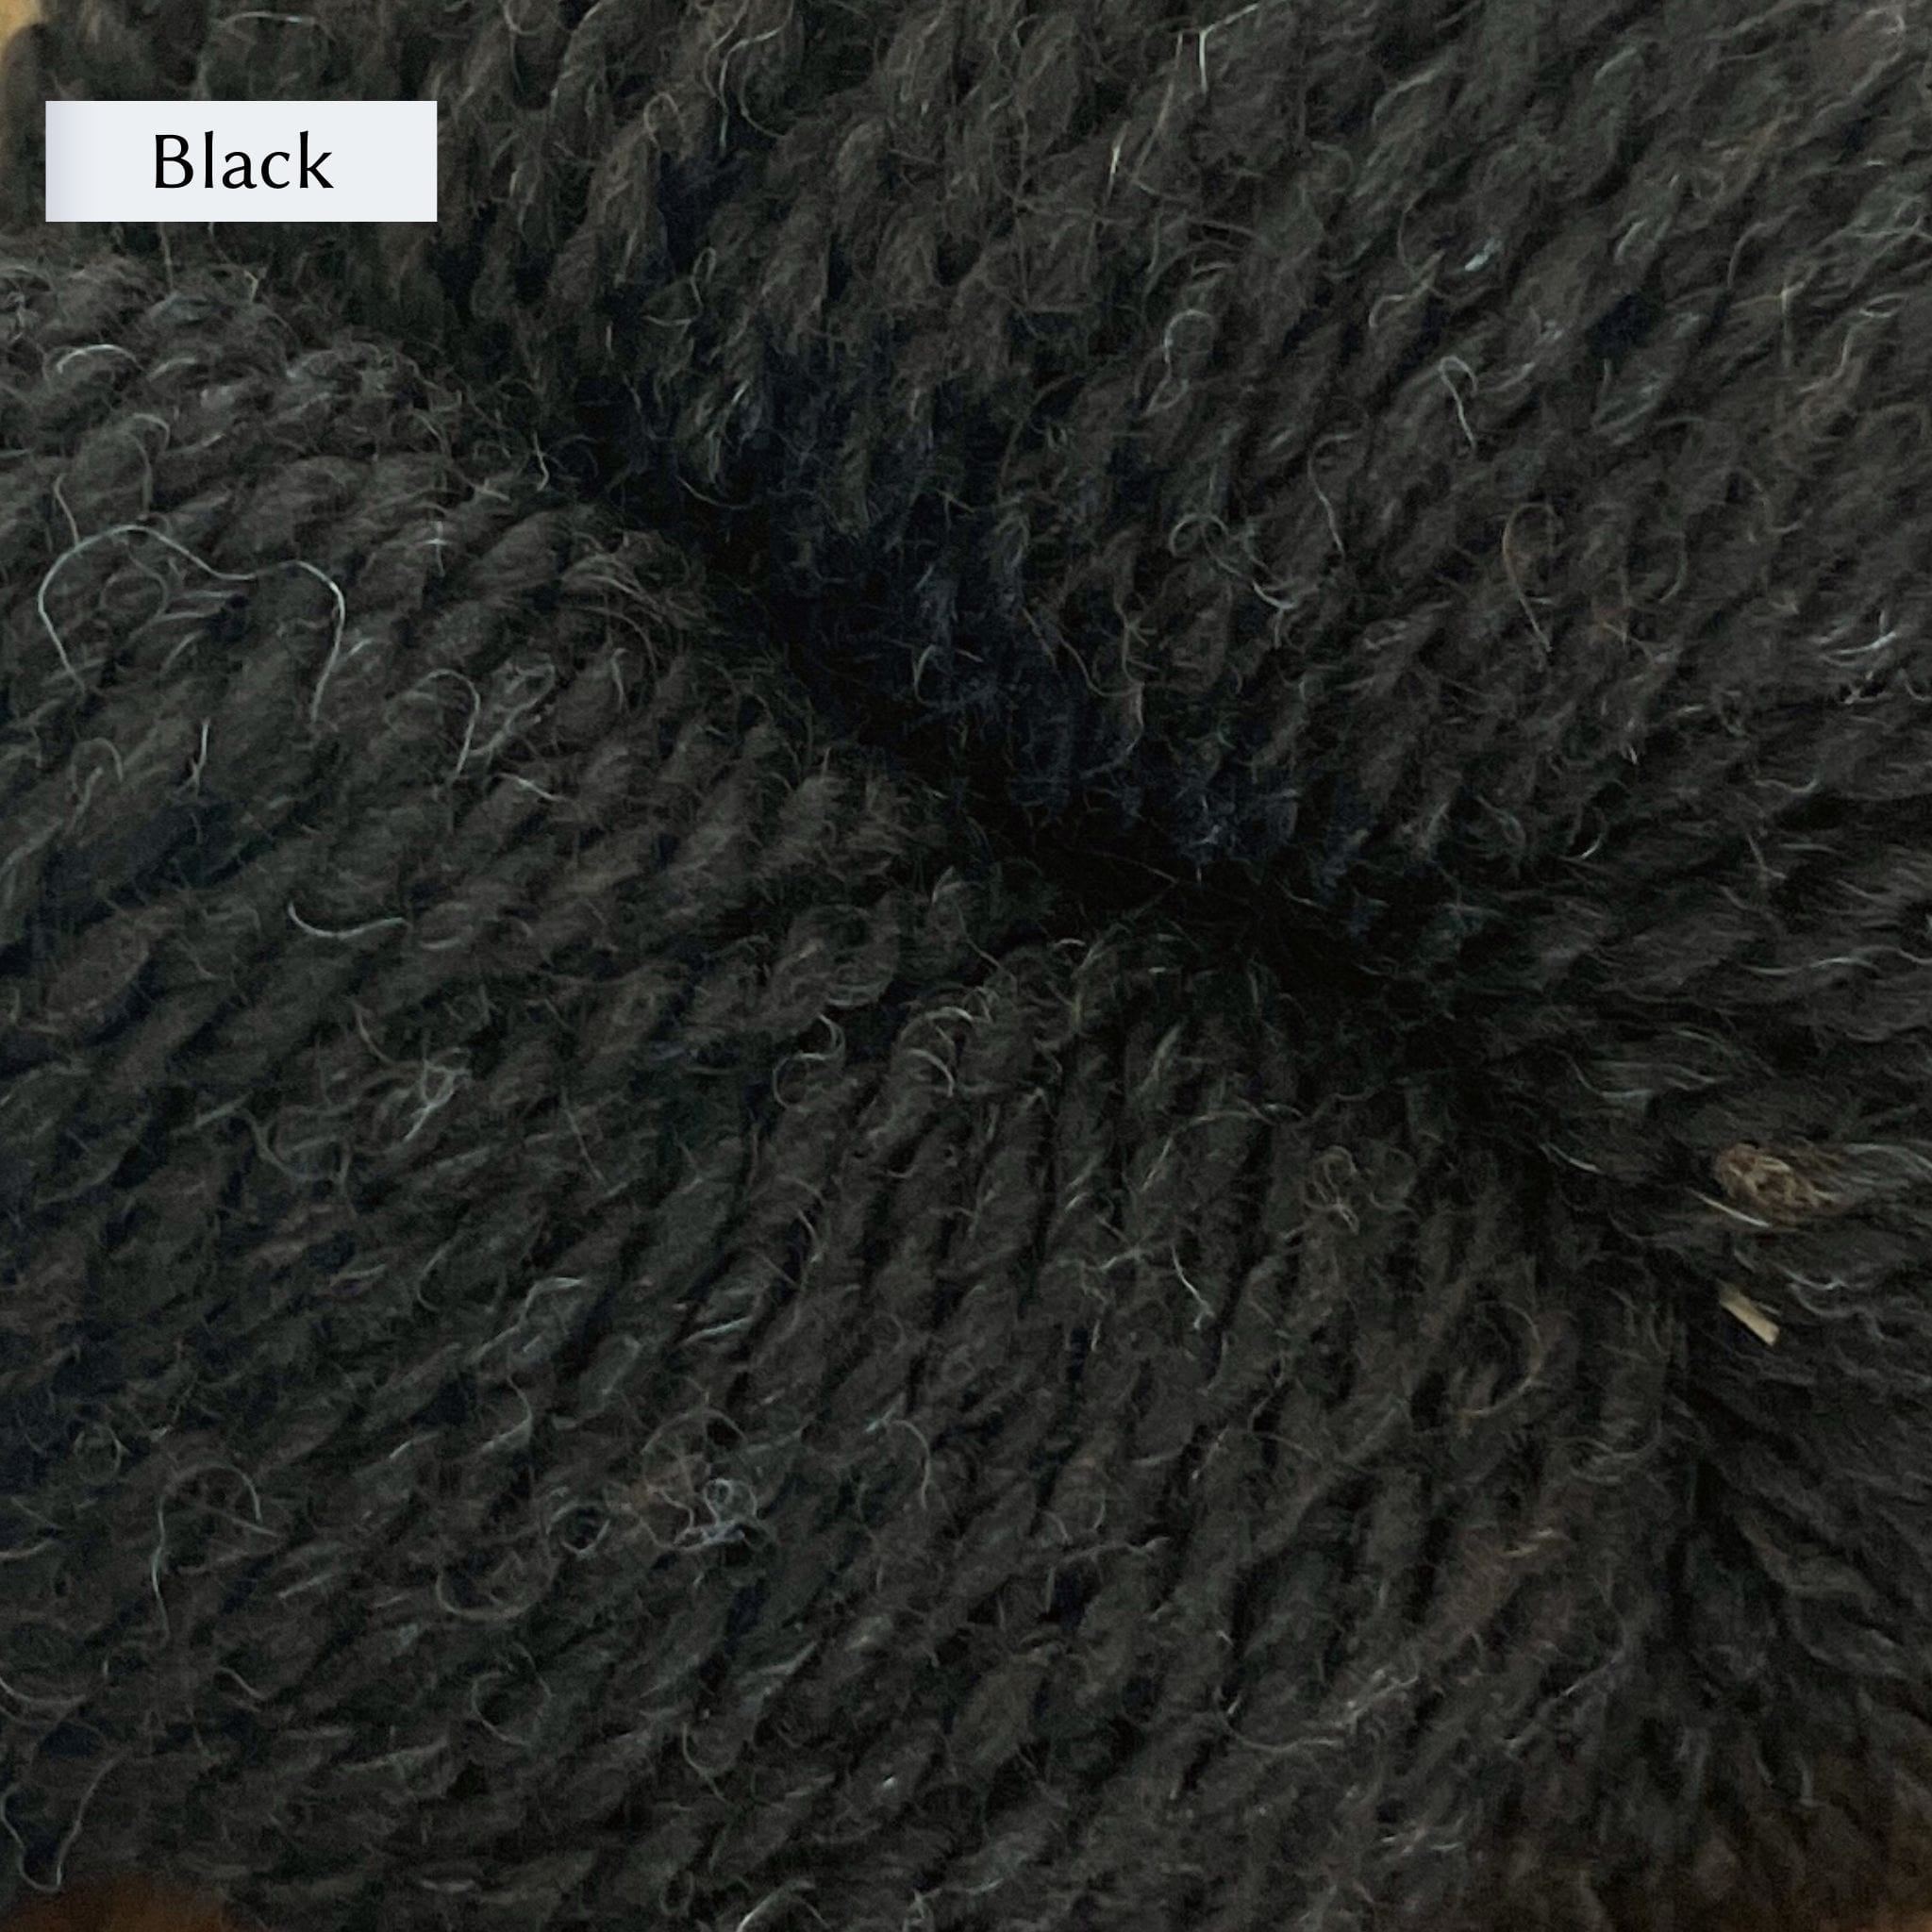 Junction Fiber Mill Farm Fresh yarn, DK weight, in color Black